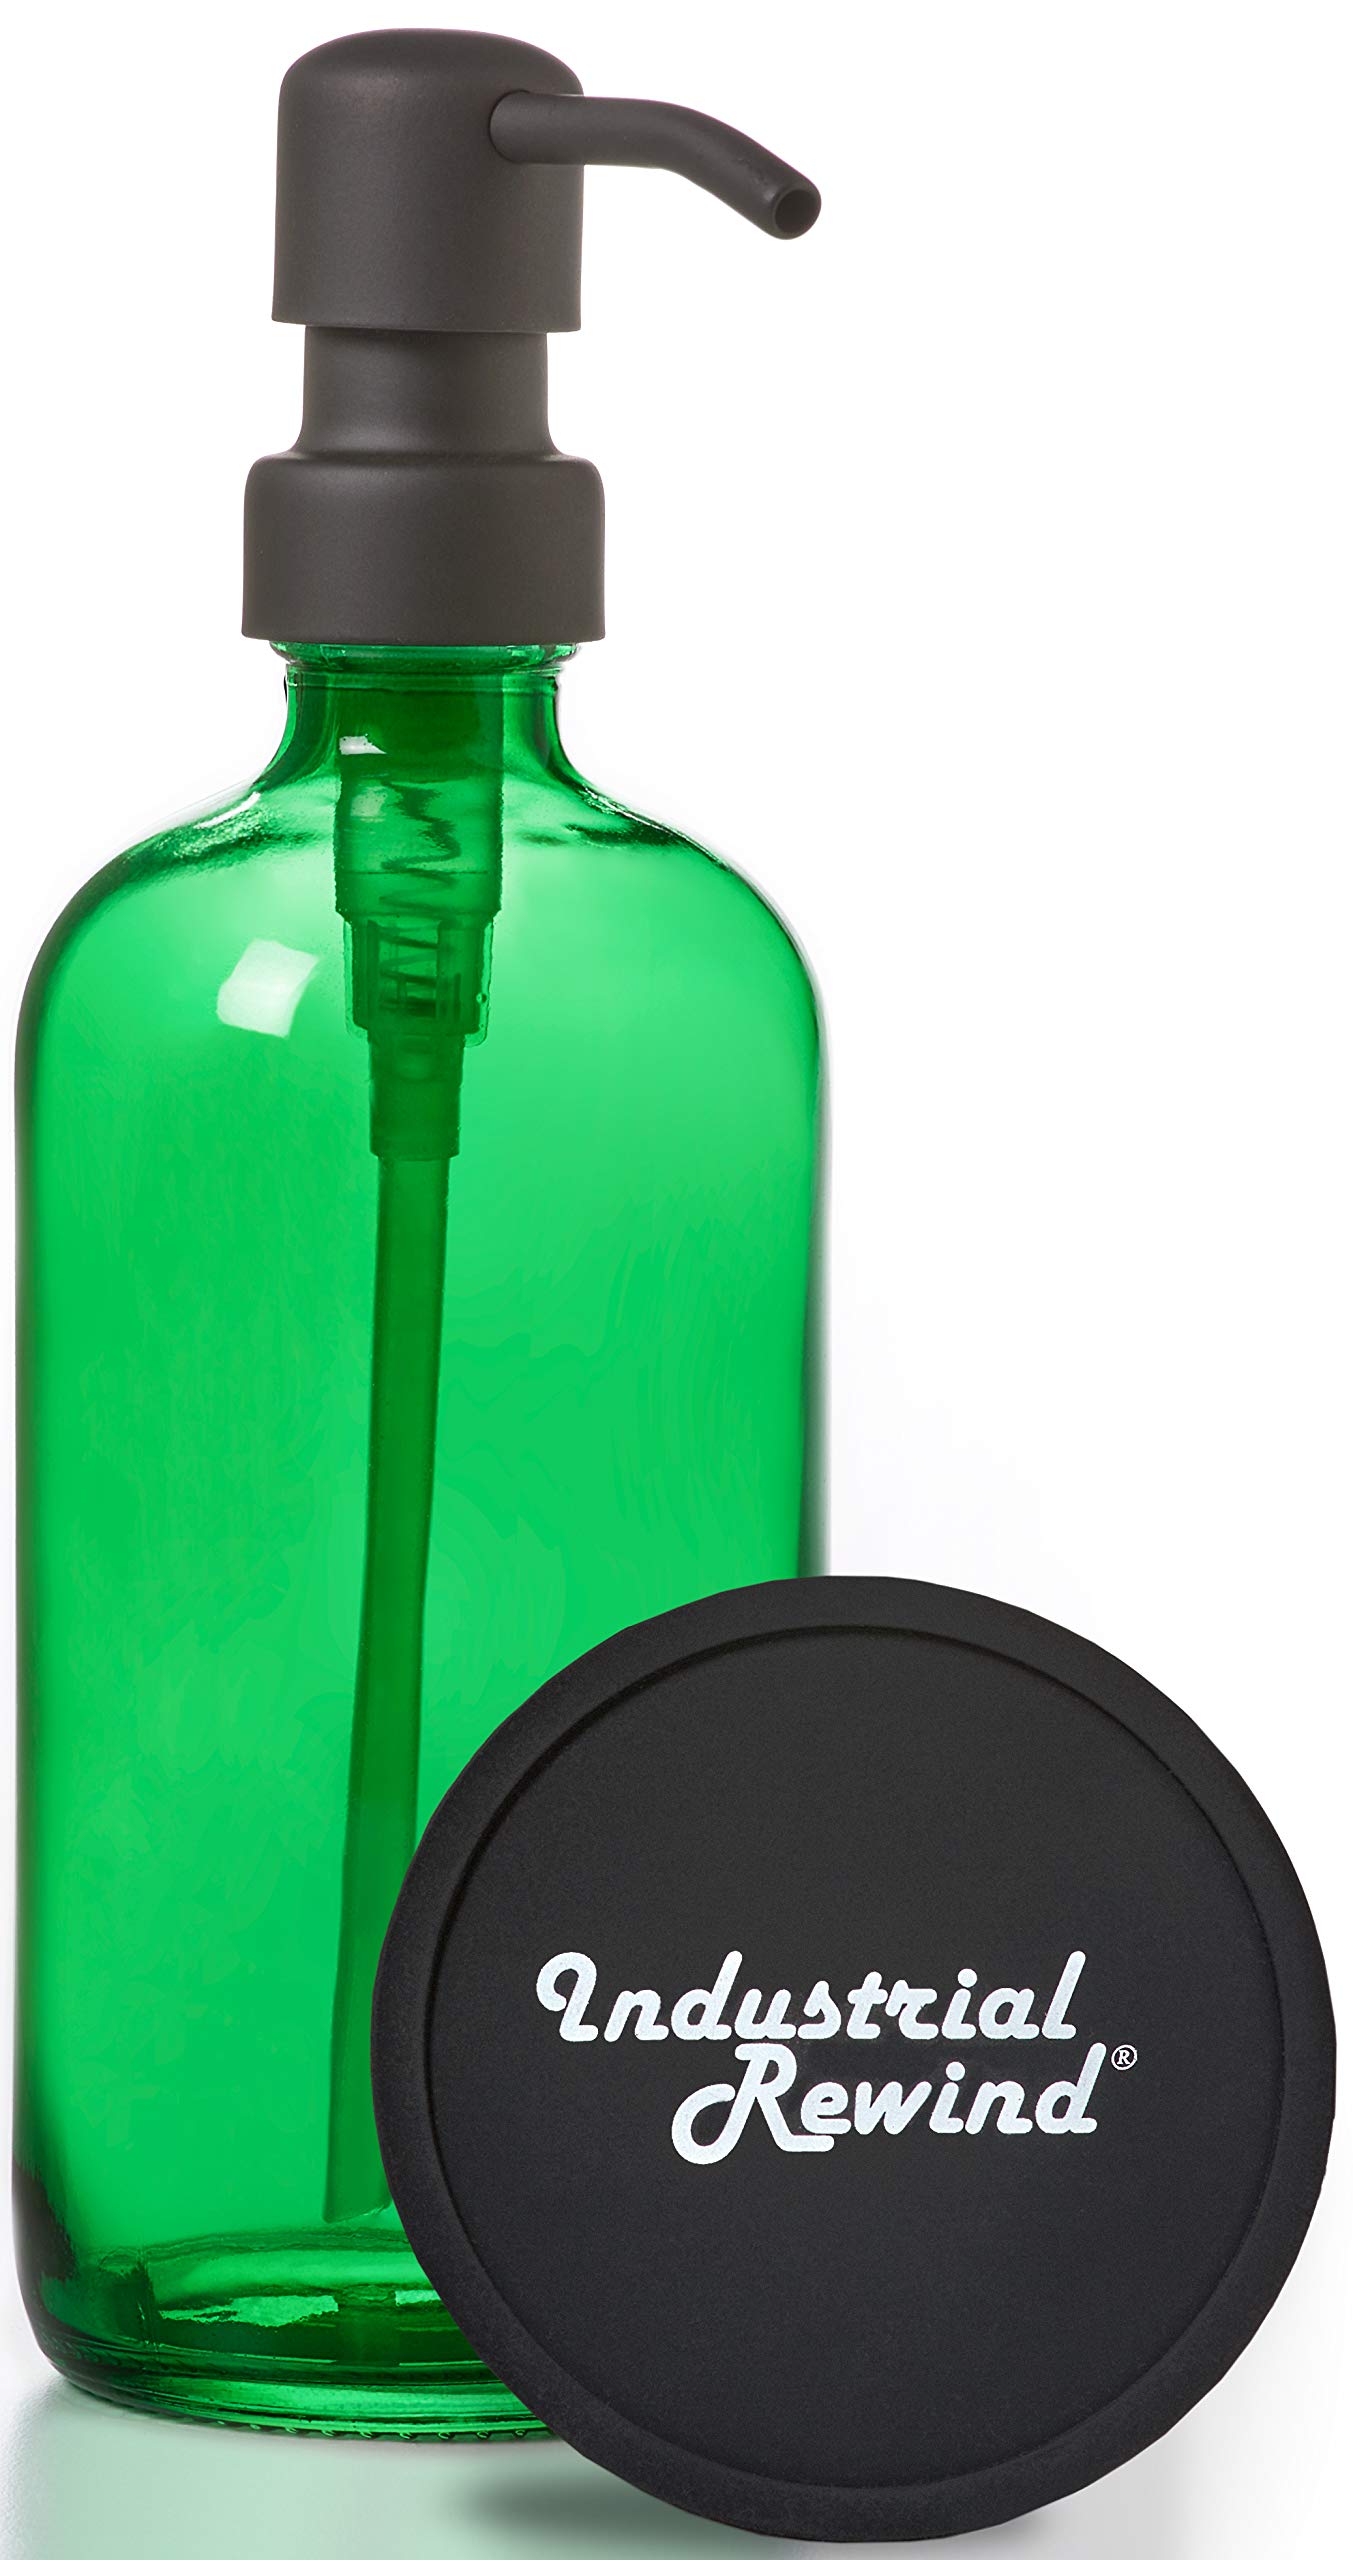 Book Cover Industrial Rewind Black Metal Bathroom/Kitchen Sink Soap Dispenser Pump with Green 16oz Glass Bottle, Lotion Bottle